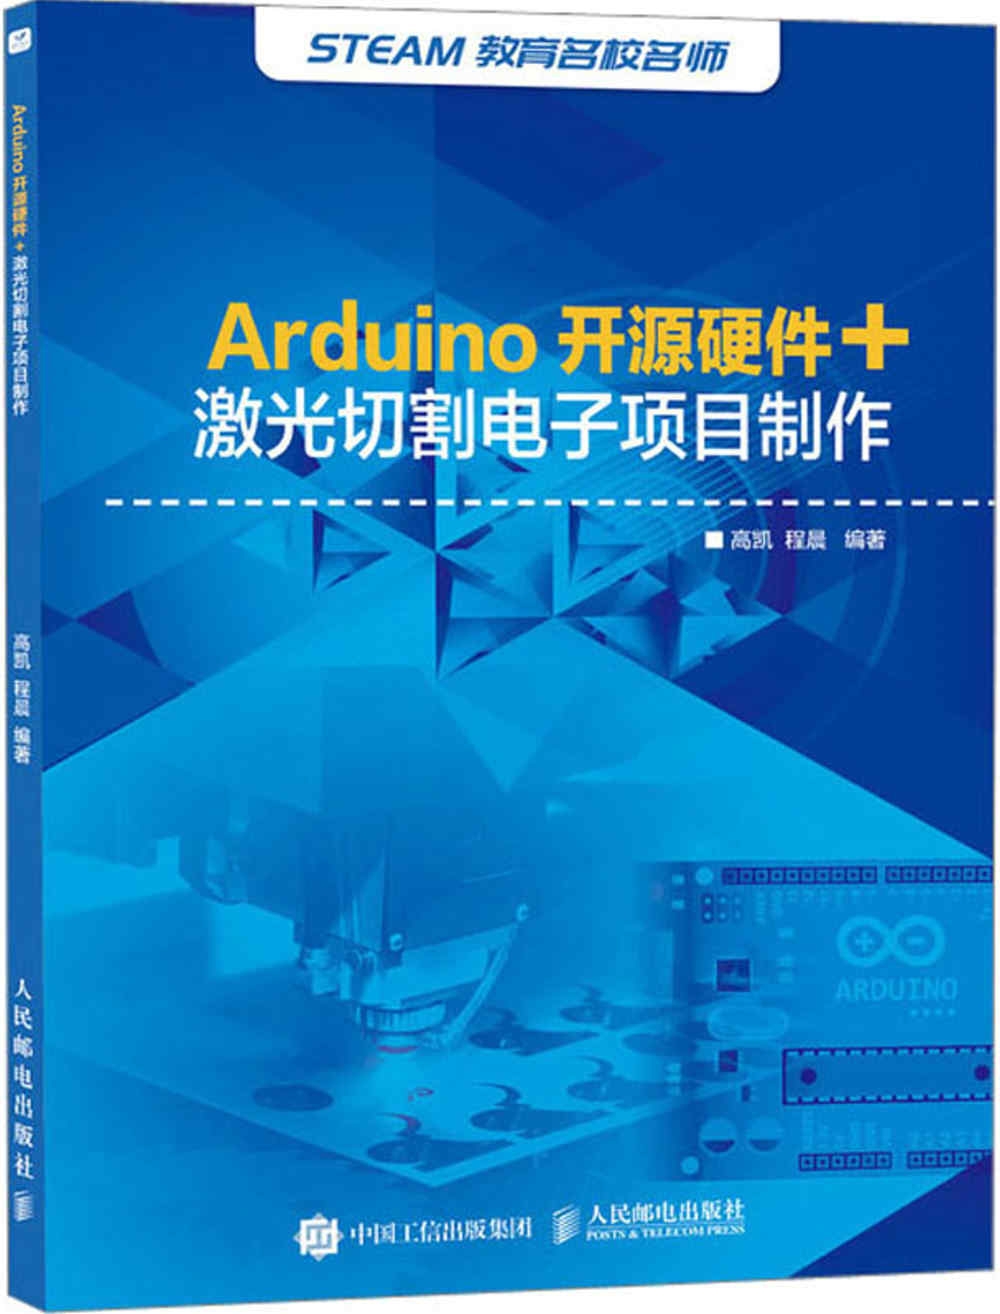 Arduino開源硬件+激光切割電子項目製作